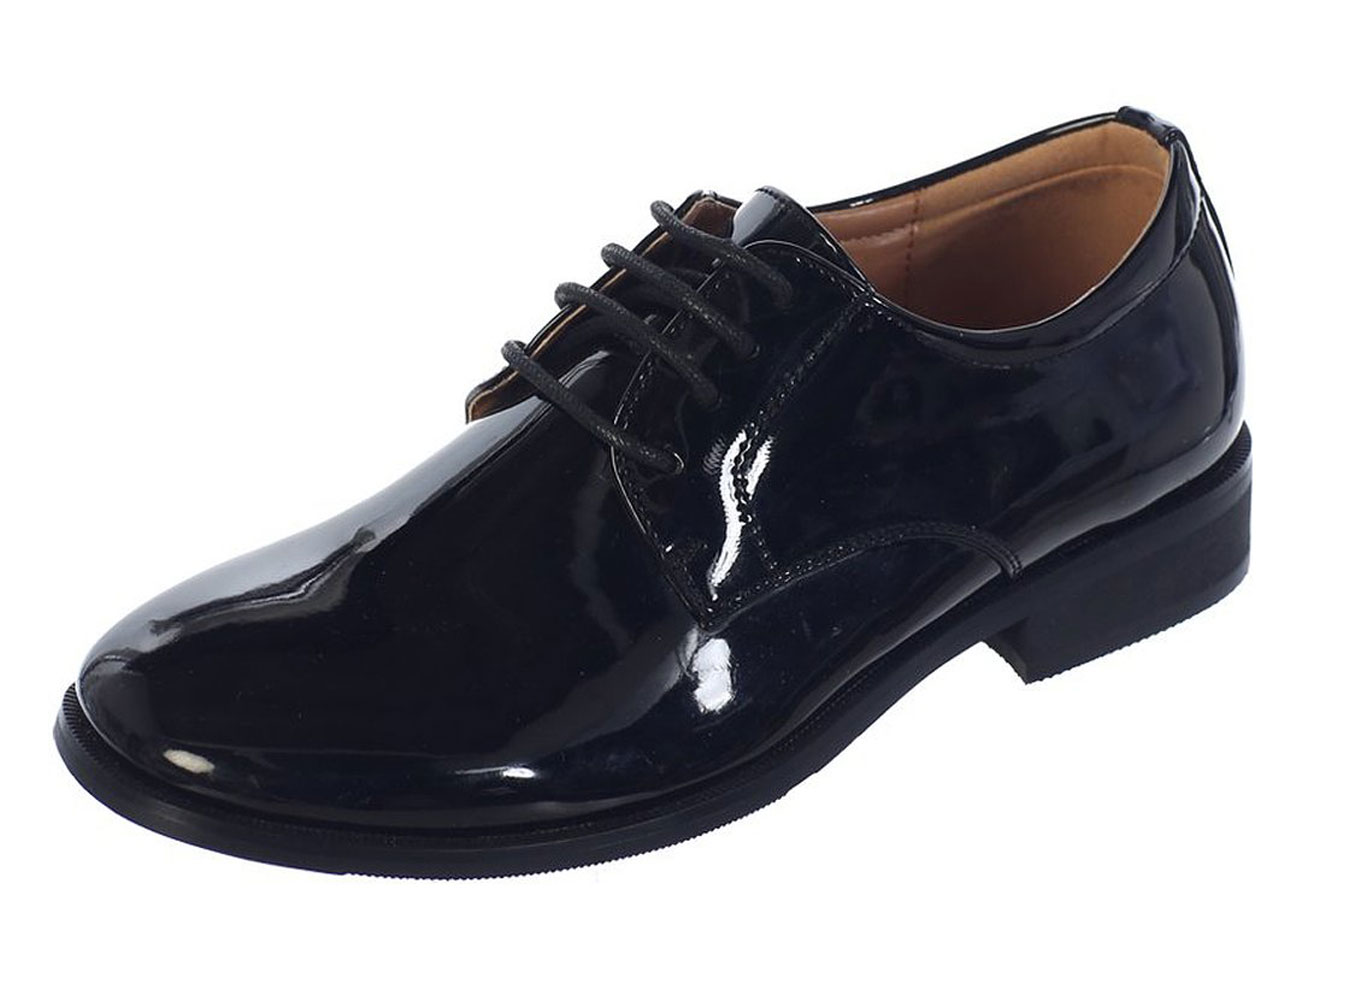 Avery Hill Boys Shiny or Shiny Patent Leather Shoes Bk Shiny Littlekid 9